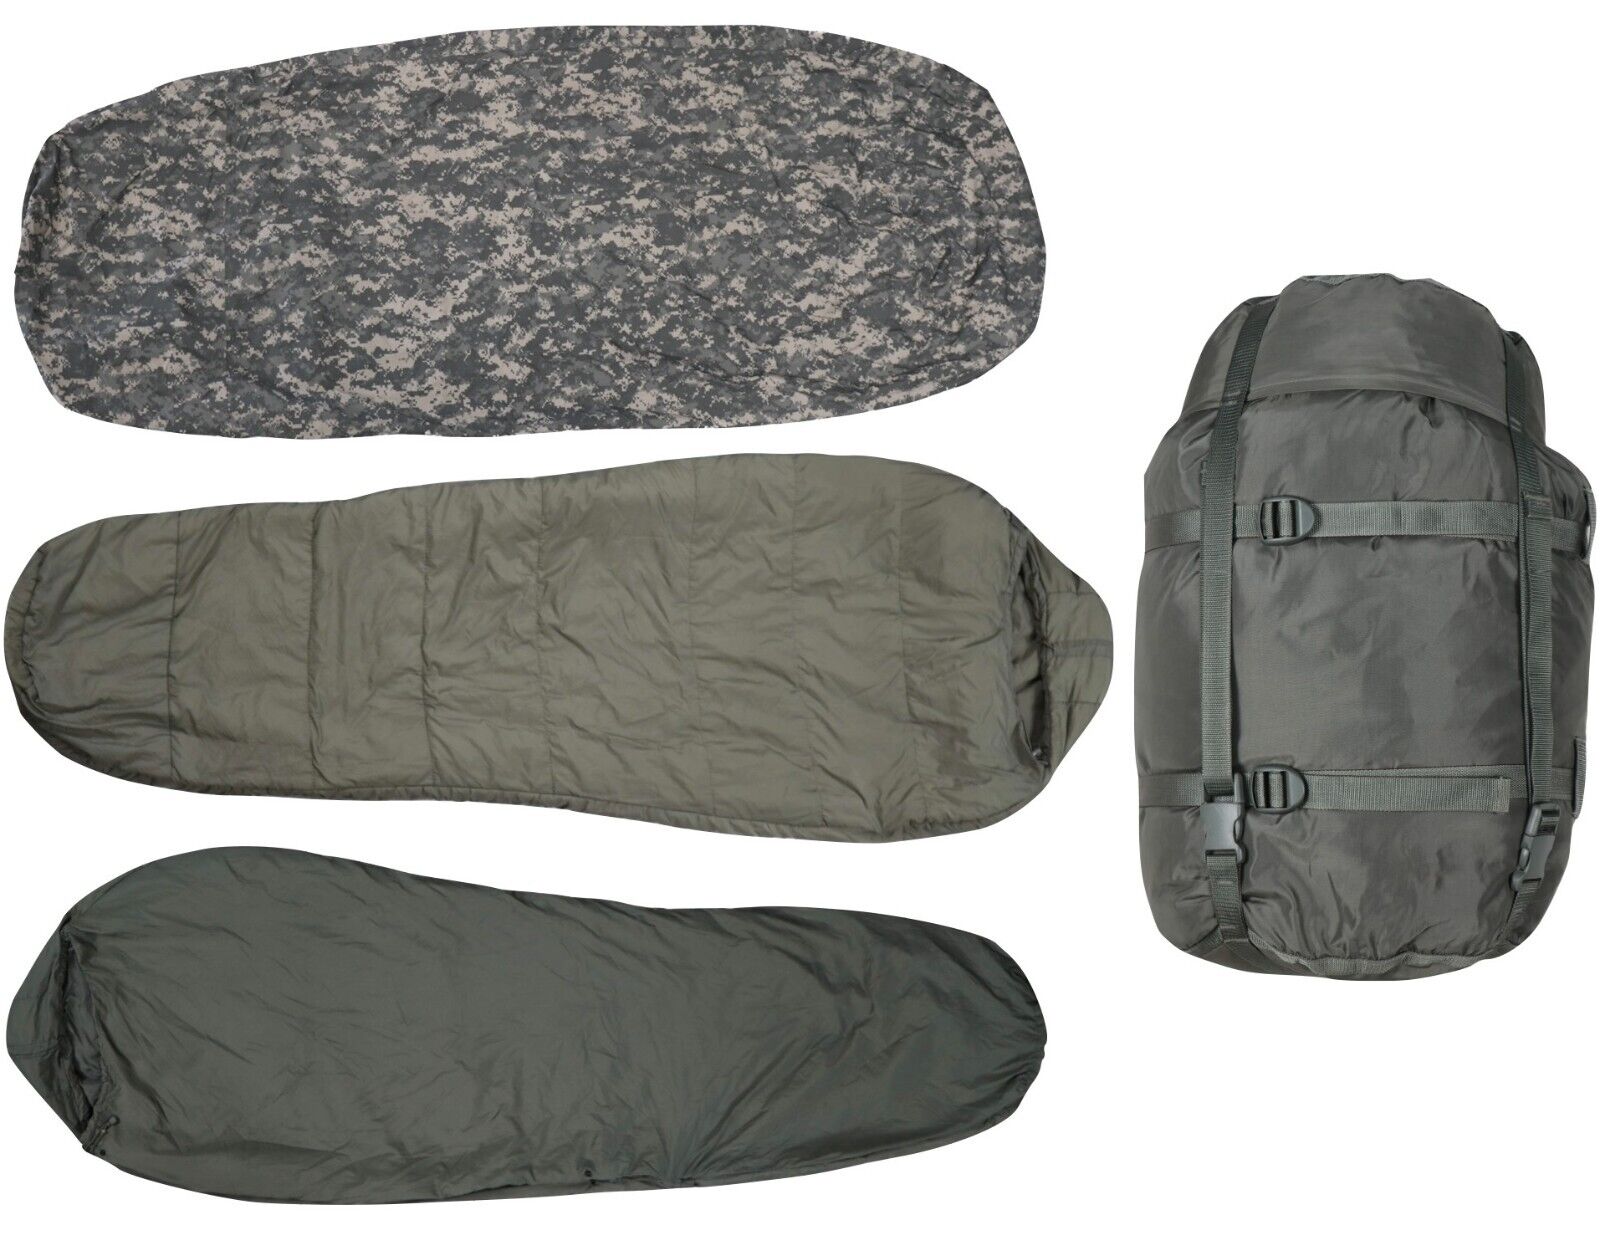 Complete MSS Modular Sleep System w Sleeping Bags Bivy Cover and Stuff Sacks